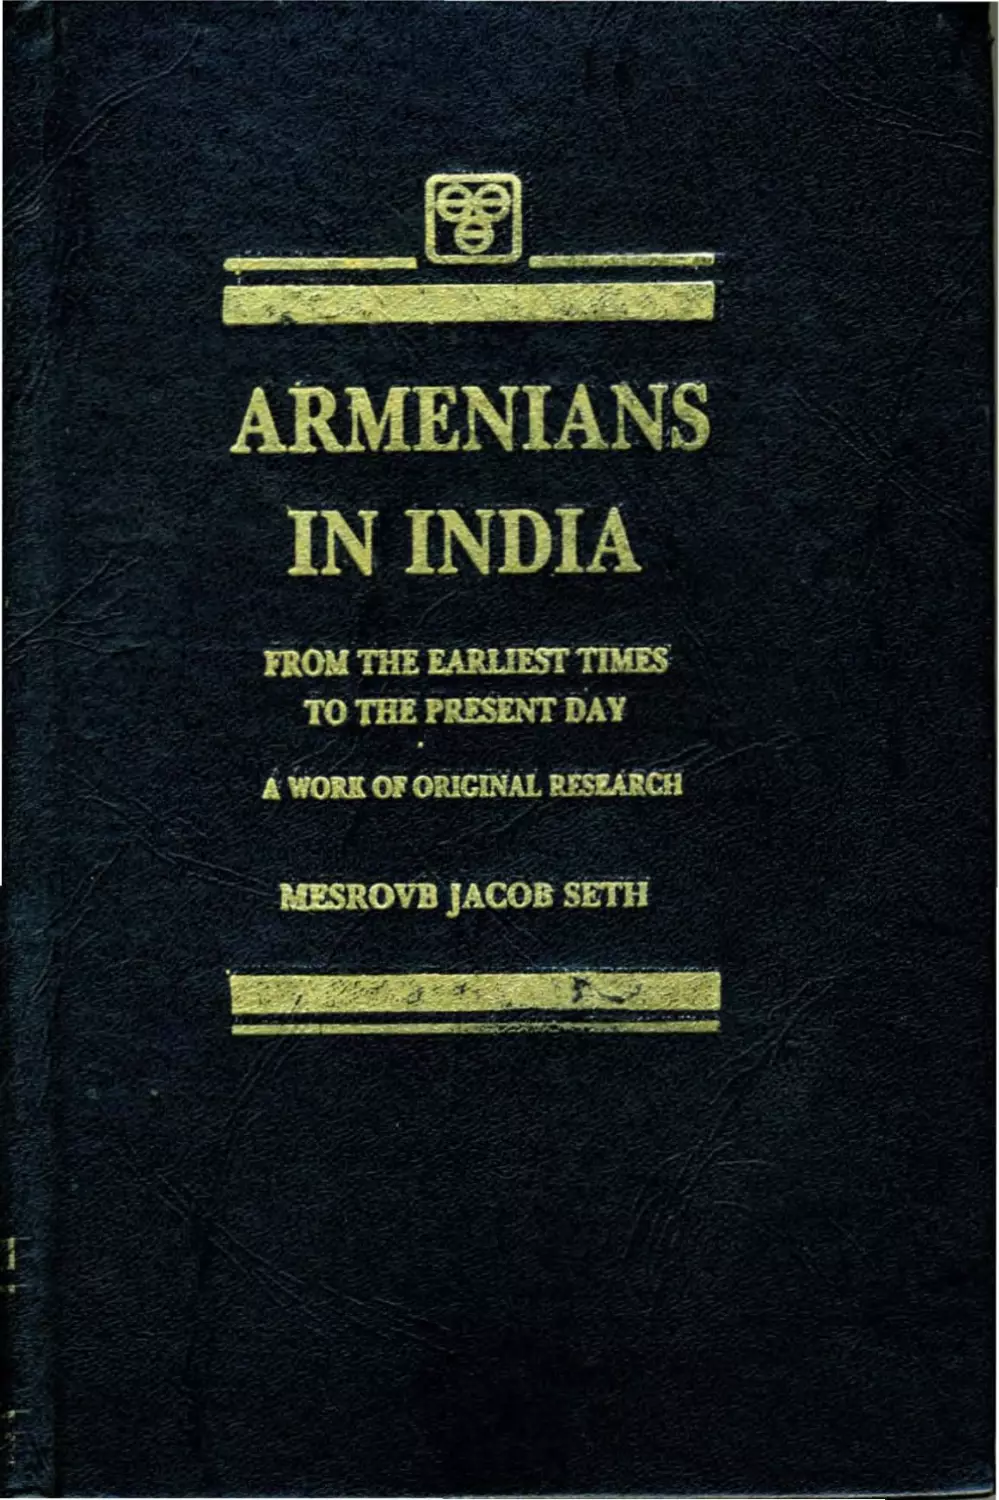 pdf doc armenians in india
Armenians in India by Seth-001